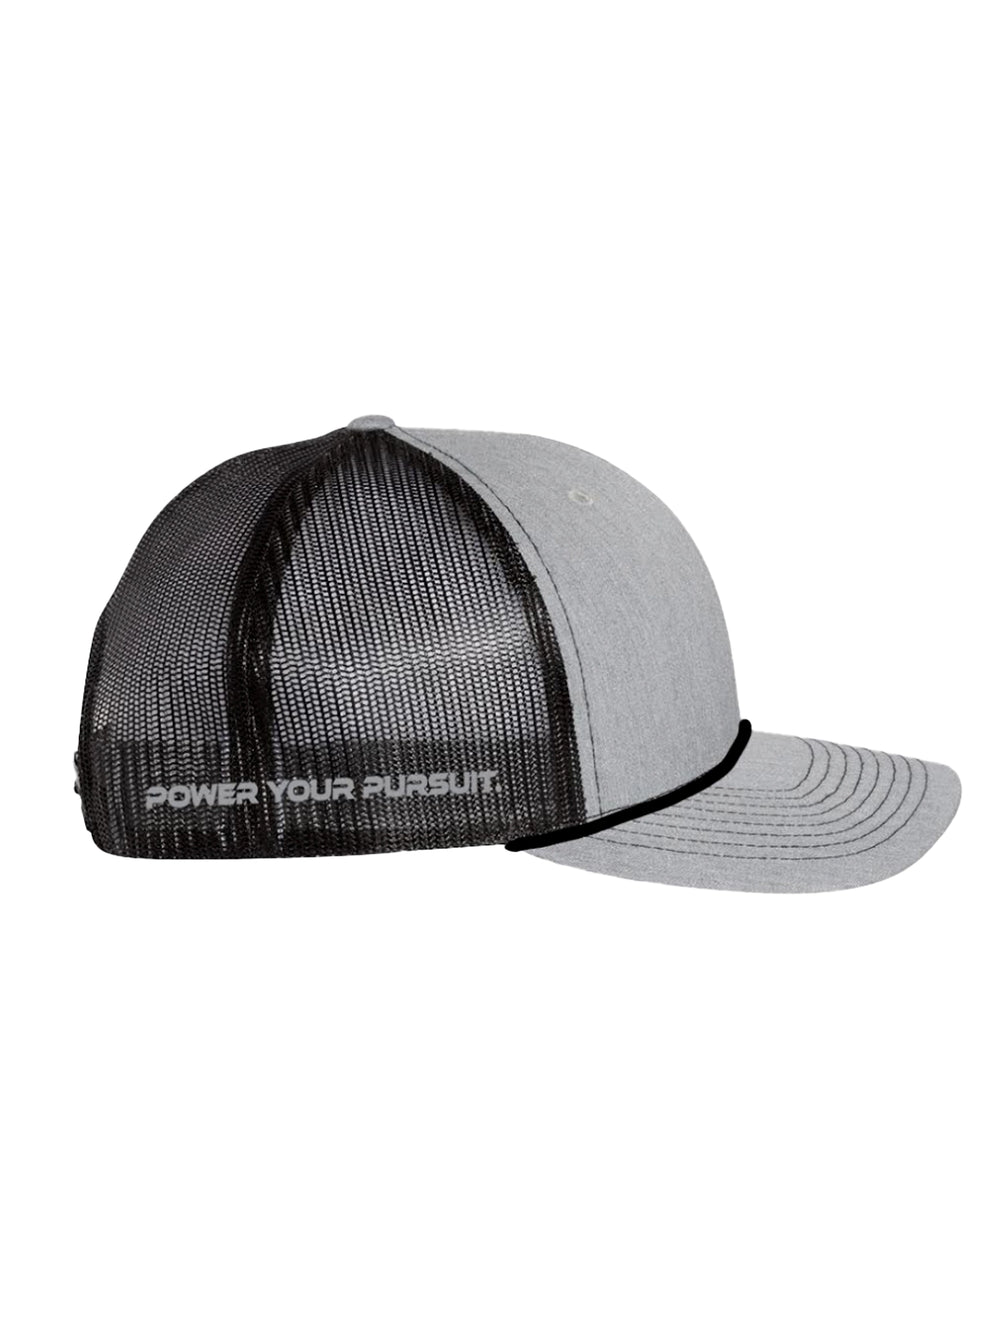 ABYSS® - Grey on Black Richardson Mesh Trucker Hat